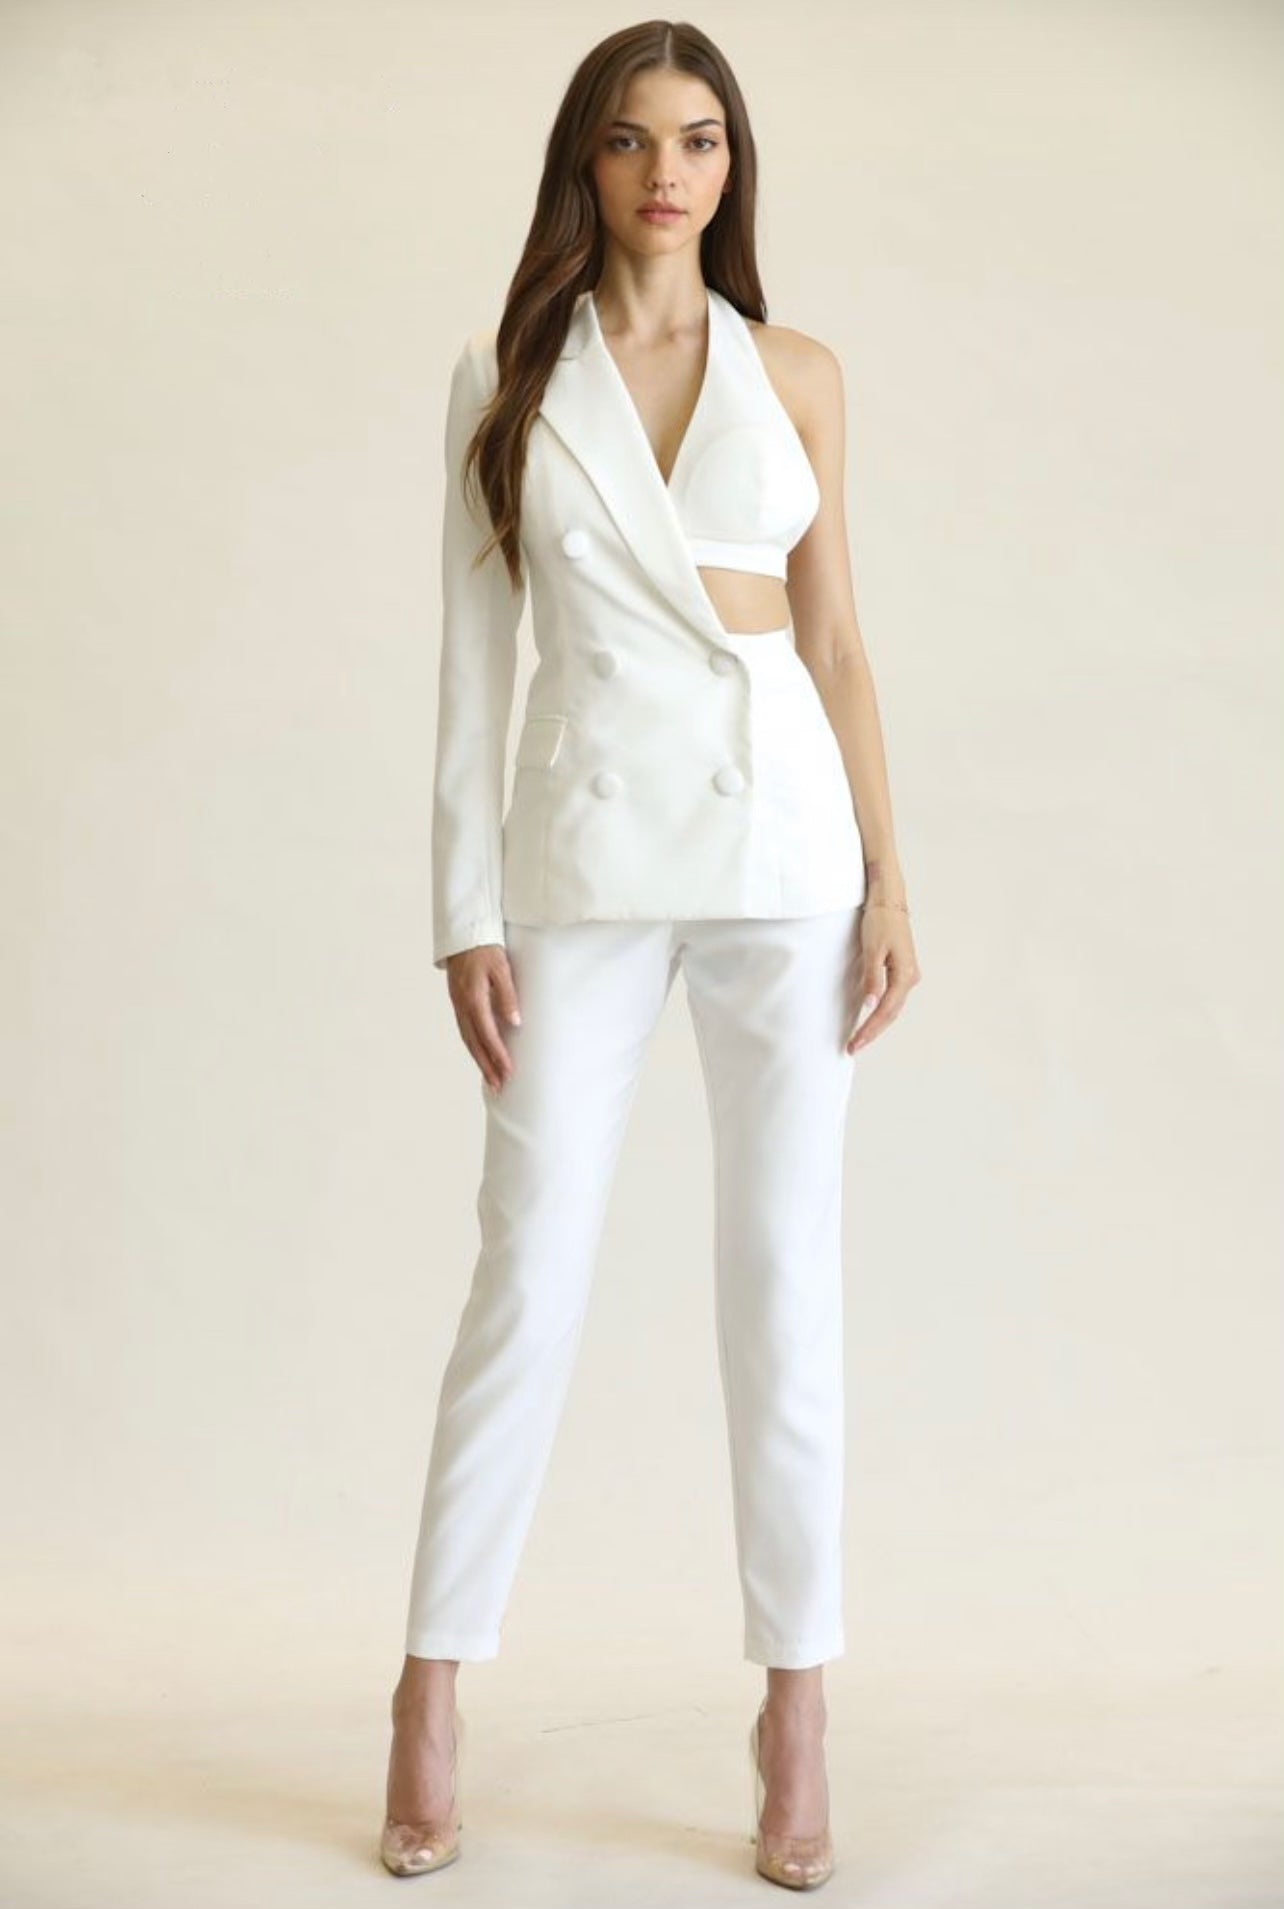 Choima white suit